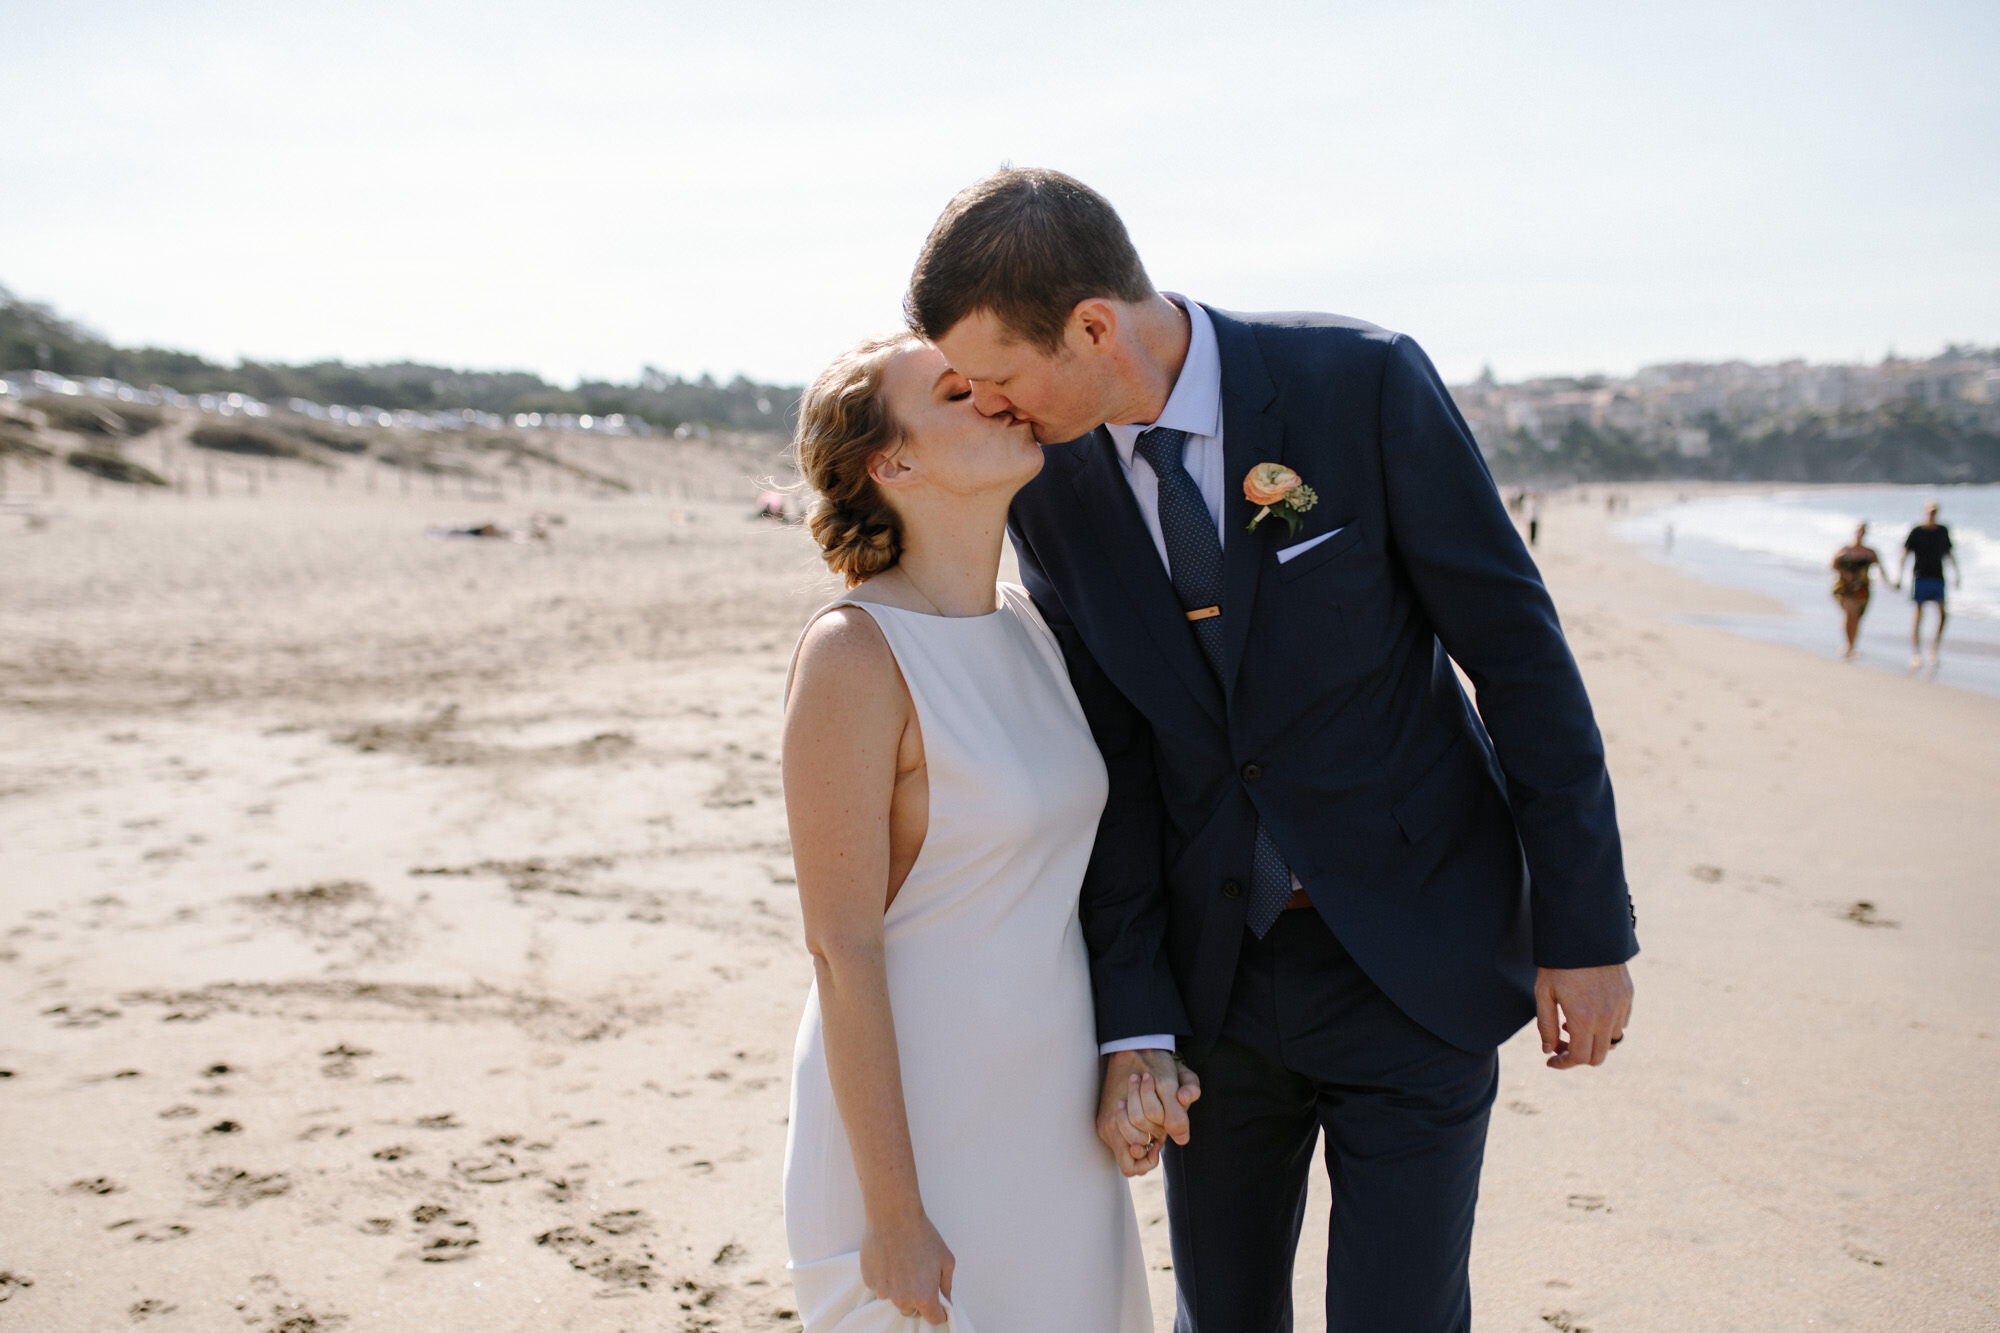 melissa-habegger-baker-beach-wedding-vows-017.jpg